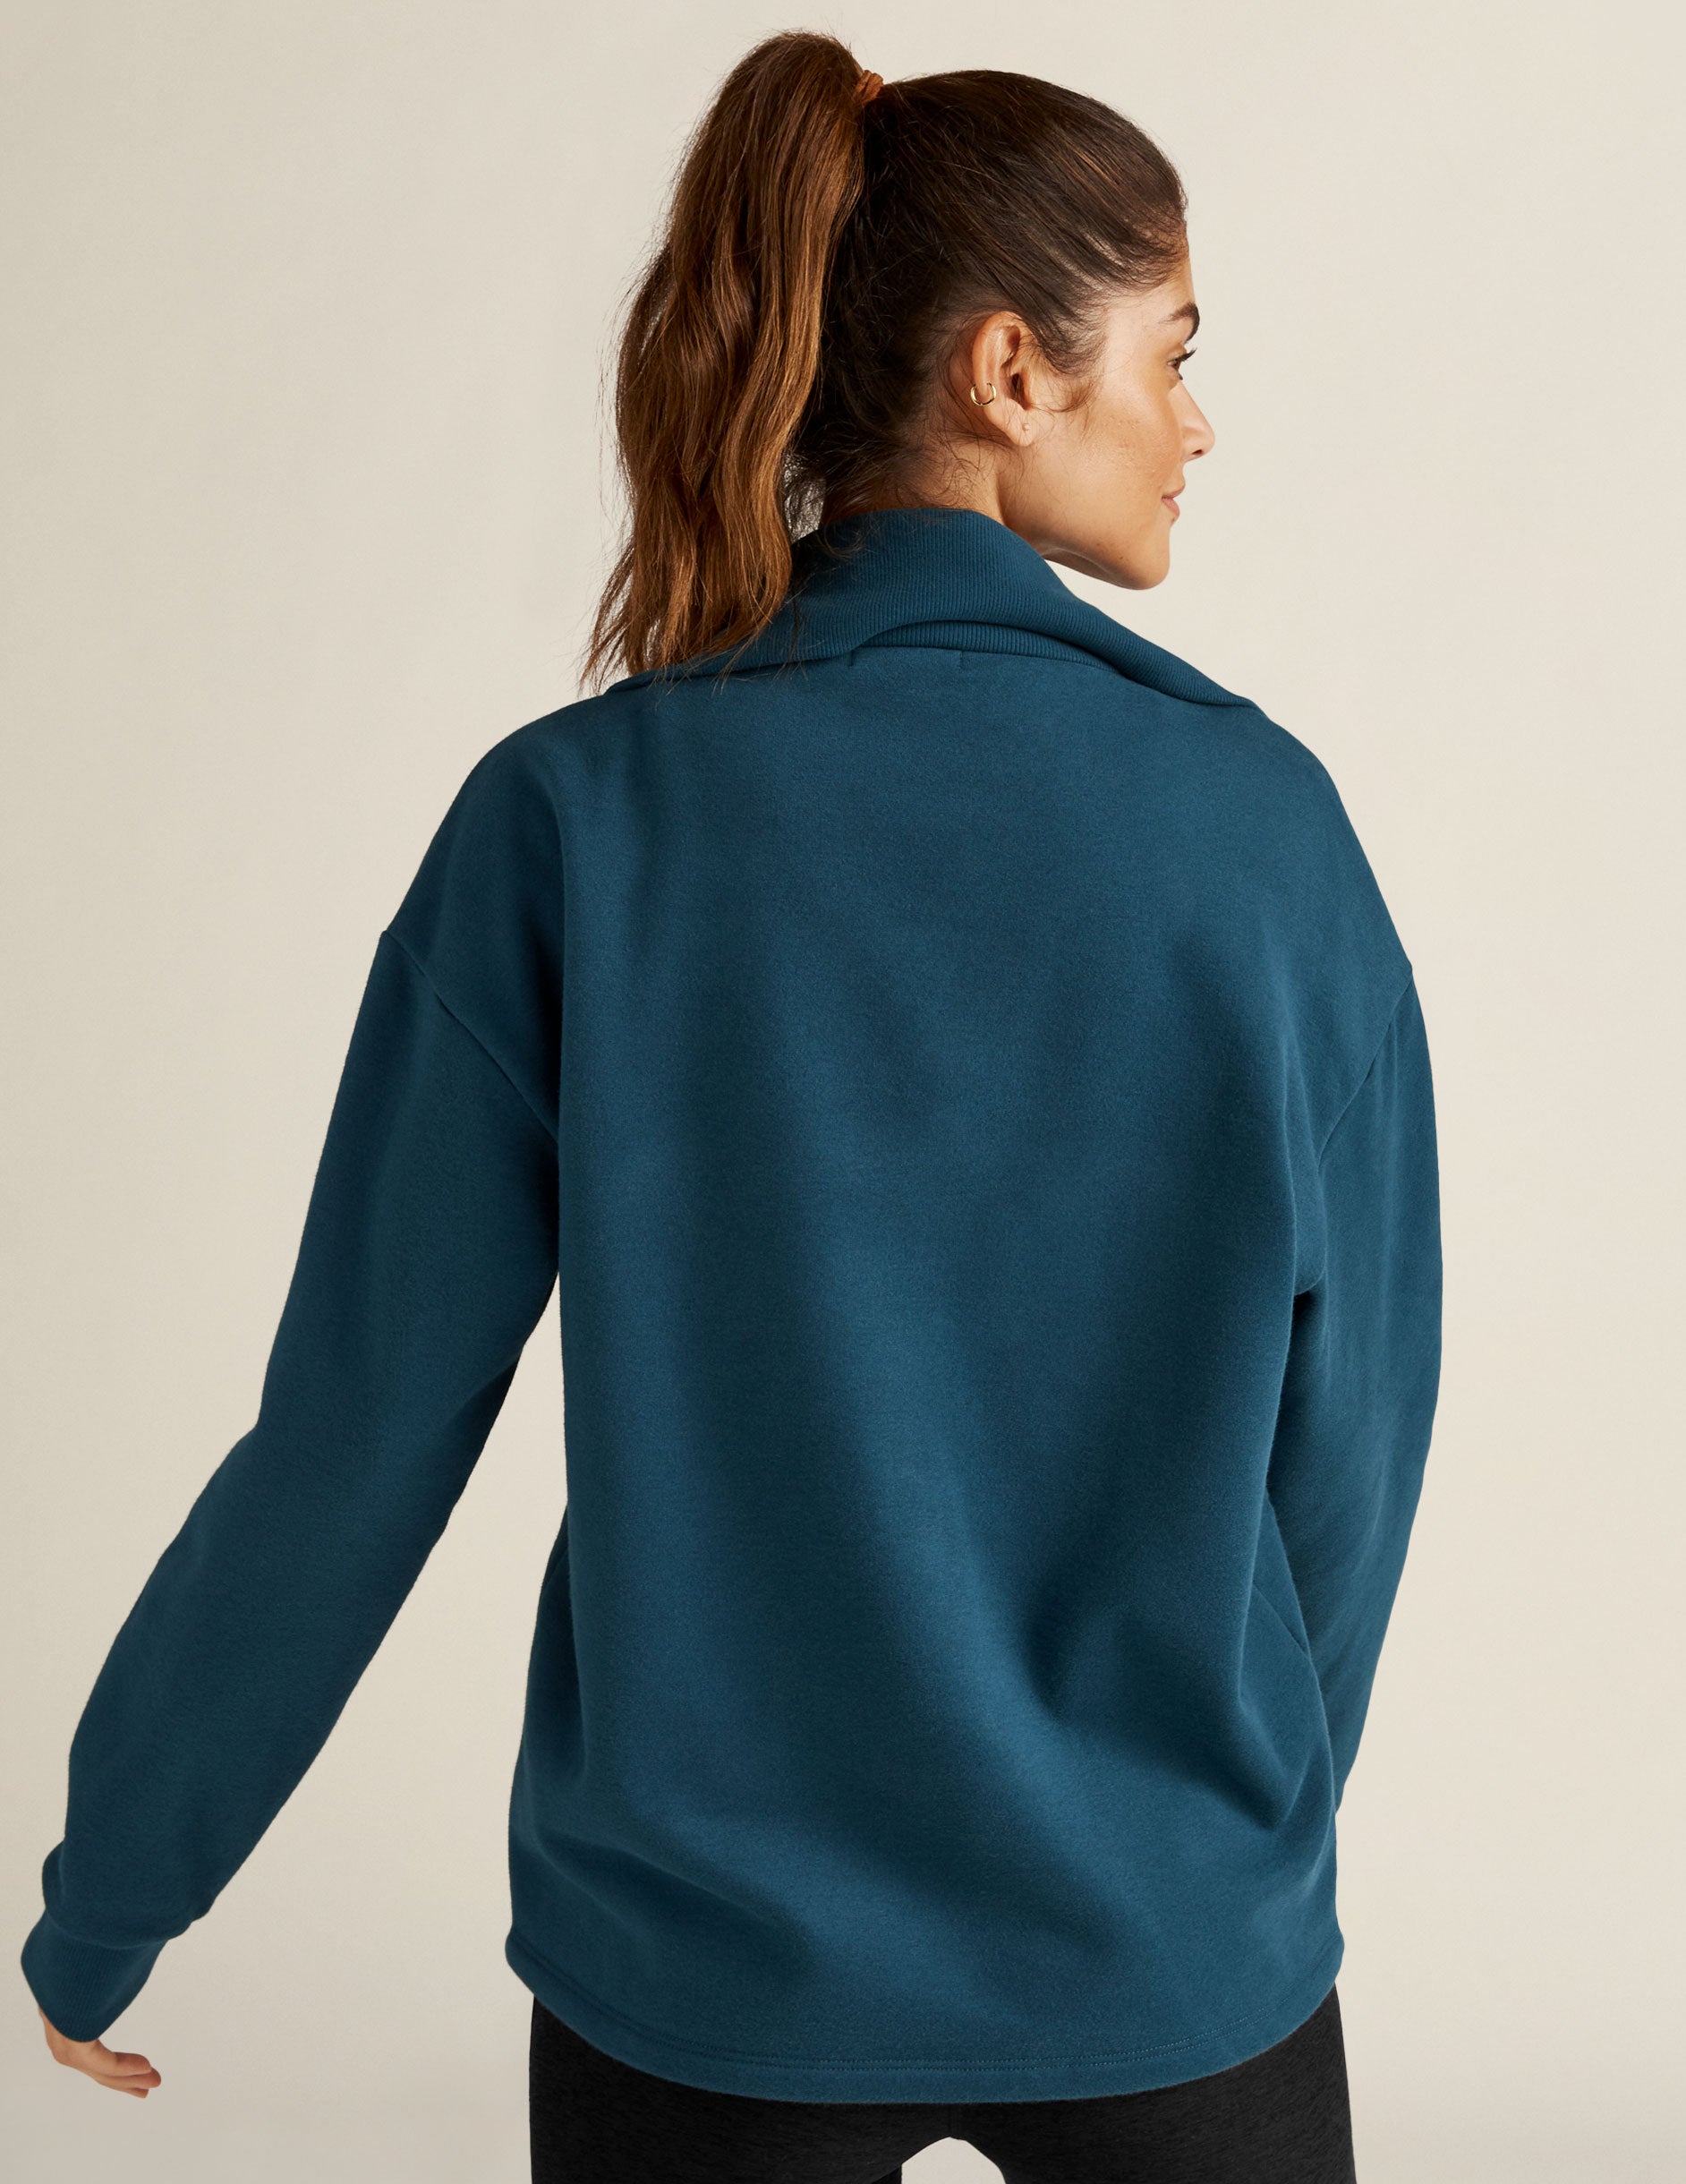 Kyodan Activewear Pullover Sweater - Gem